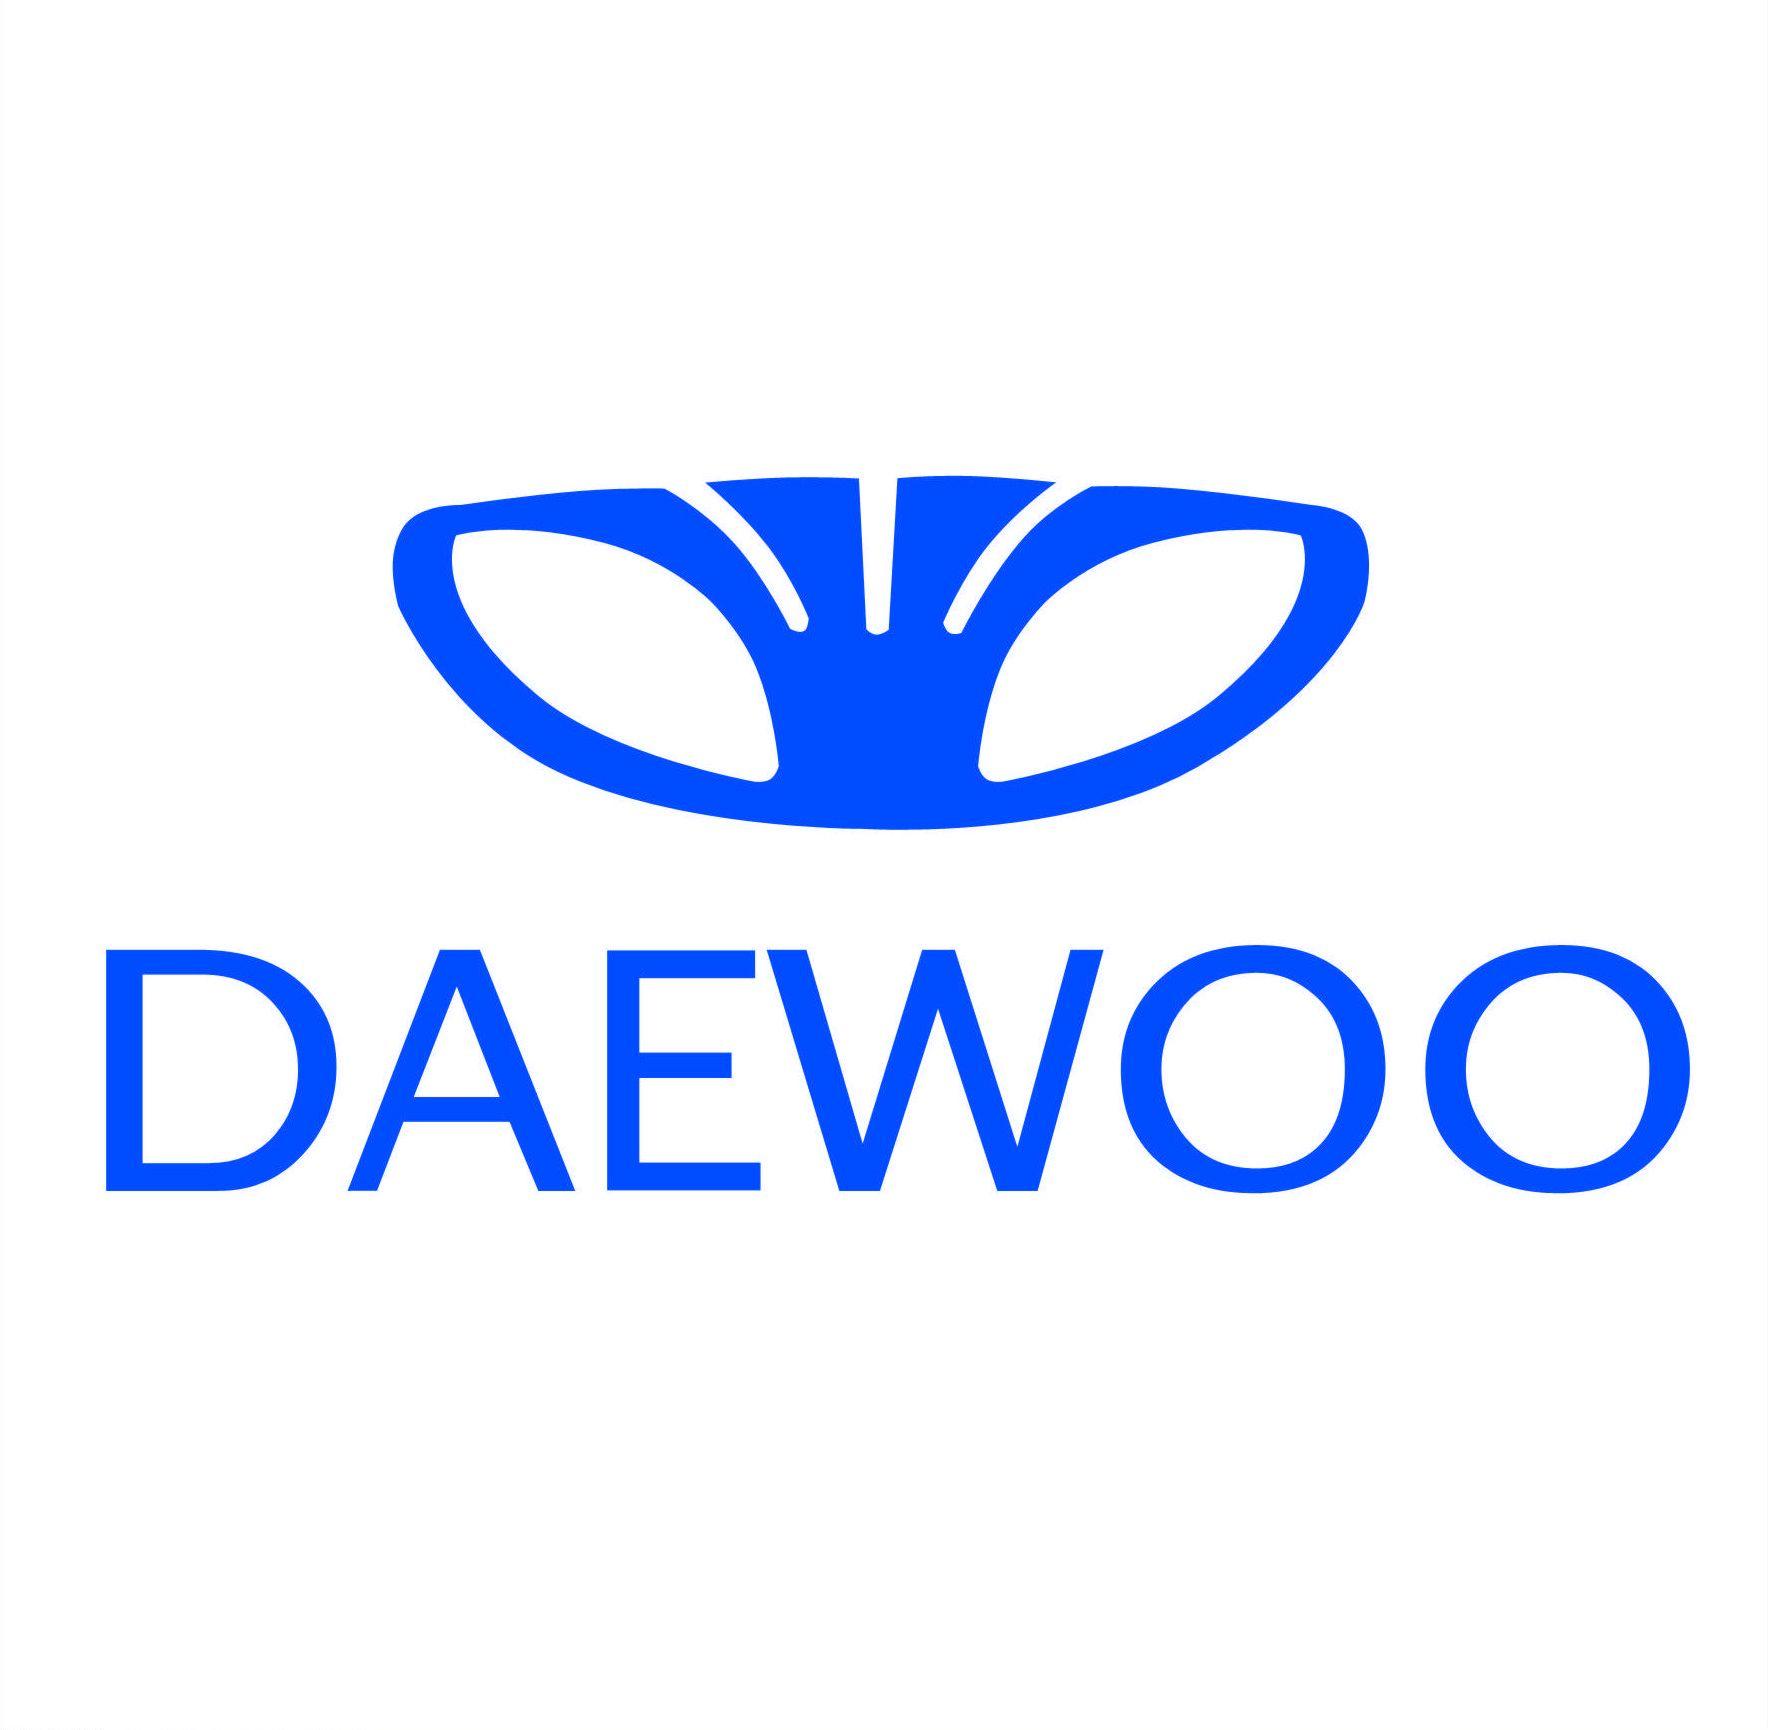 Old Daewoo Logo - Daewoo logo. Cars Heraldry / Автогеральдика. Logos и Cars